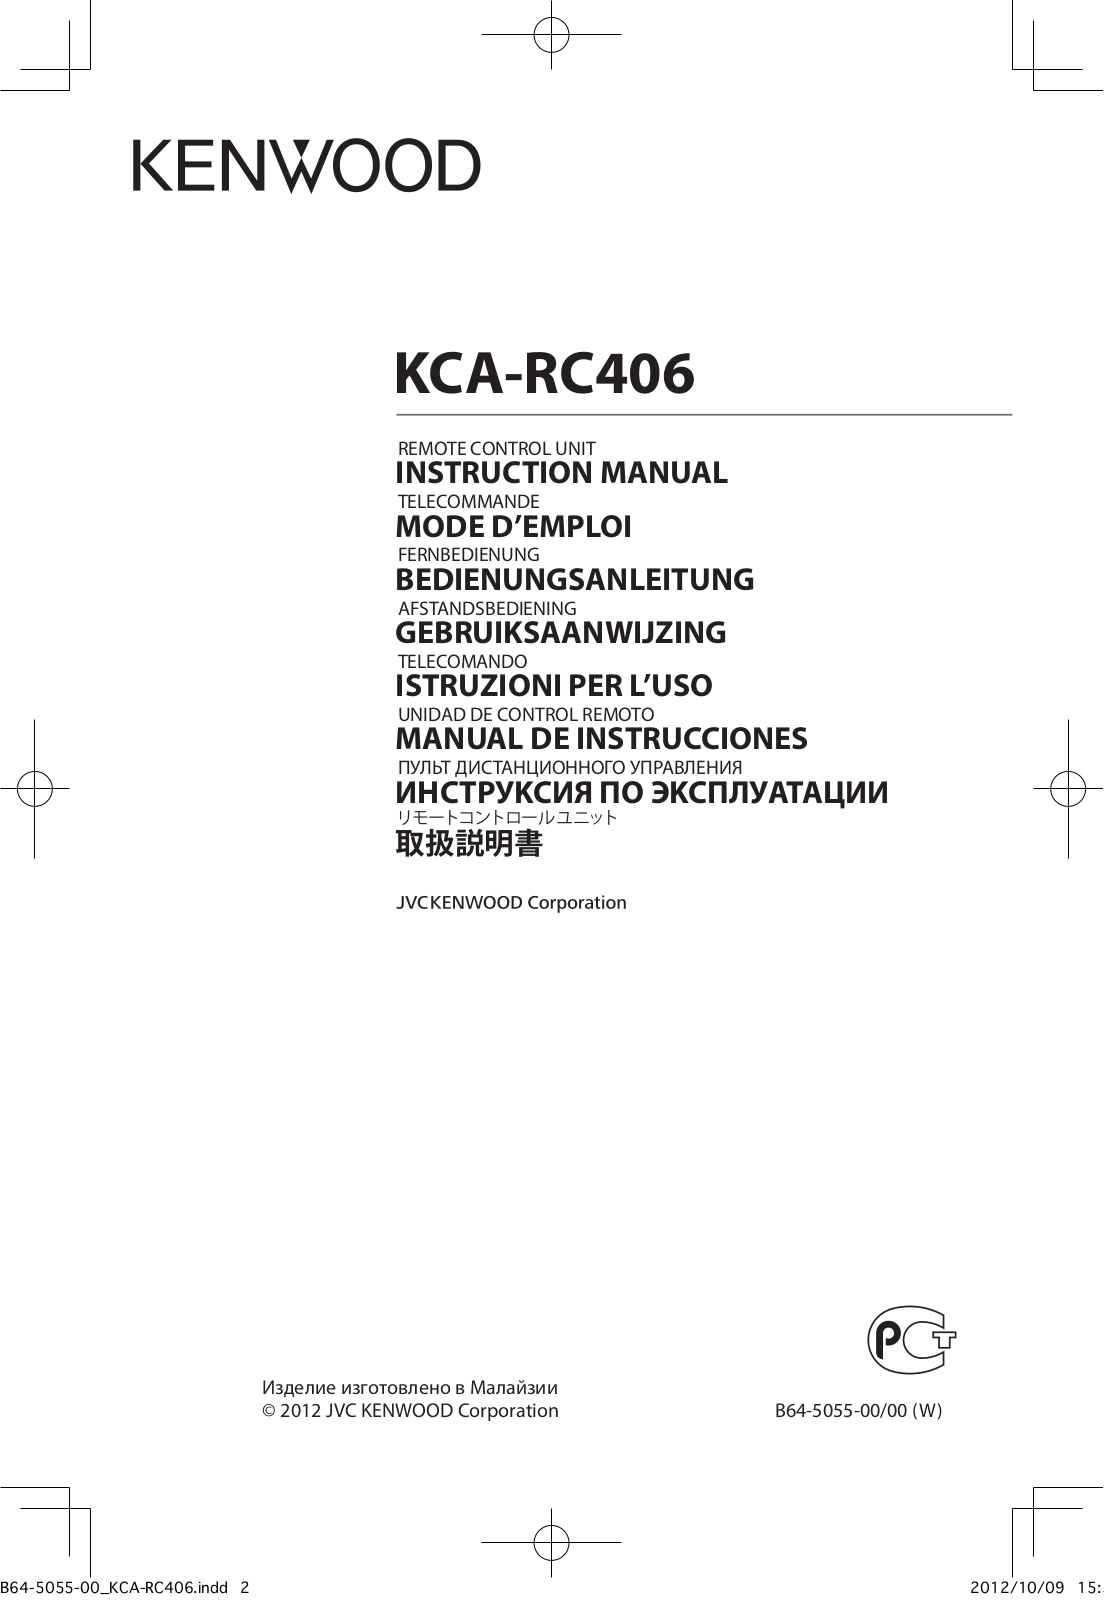 Kenwood KCA-RC406 User Manual